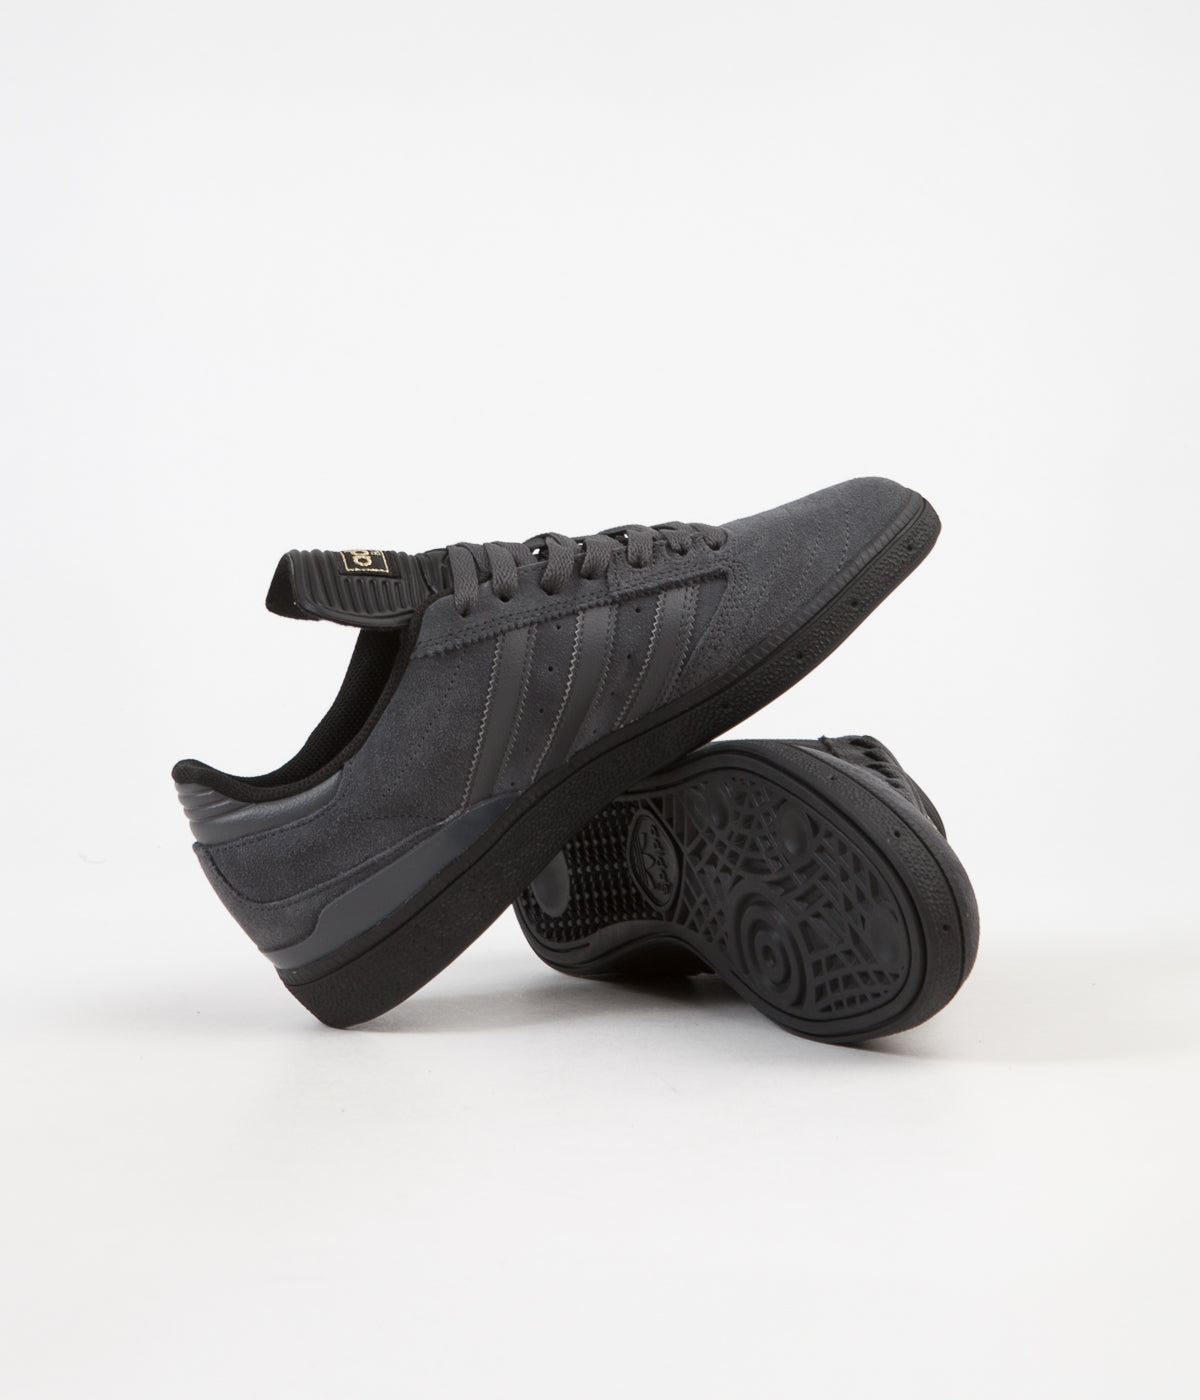 adidas busenitz pro shoes grey black gold